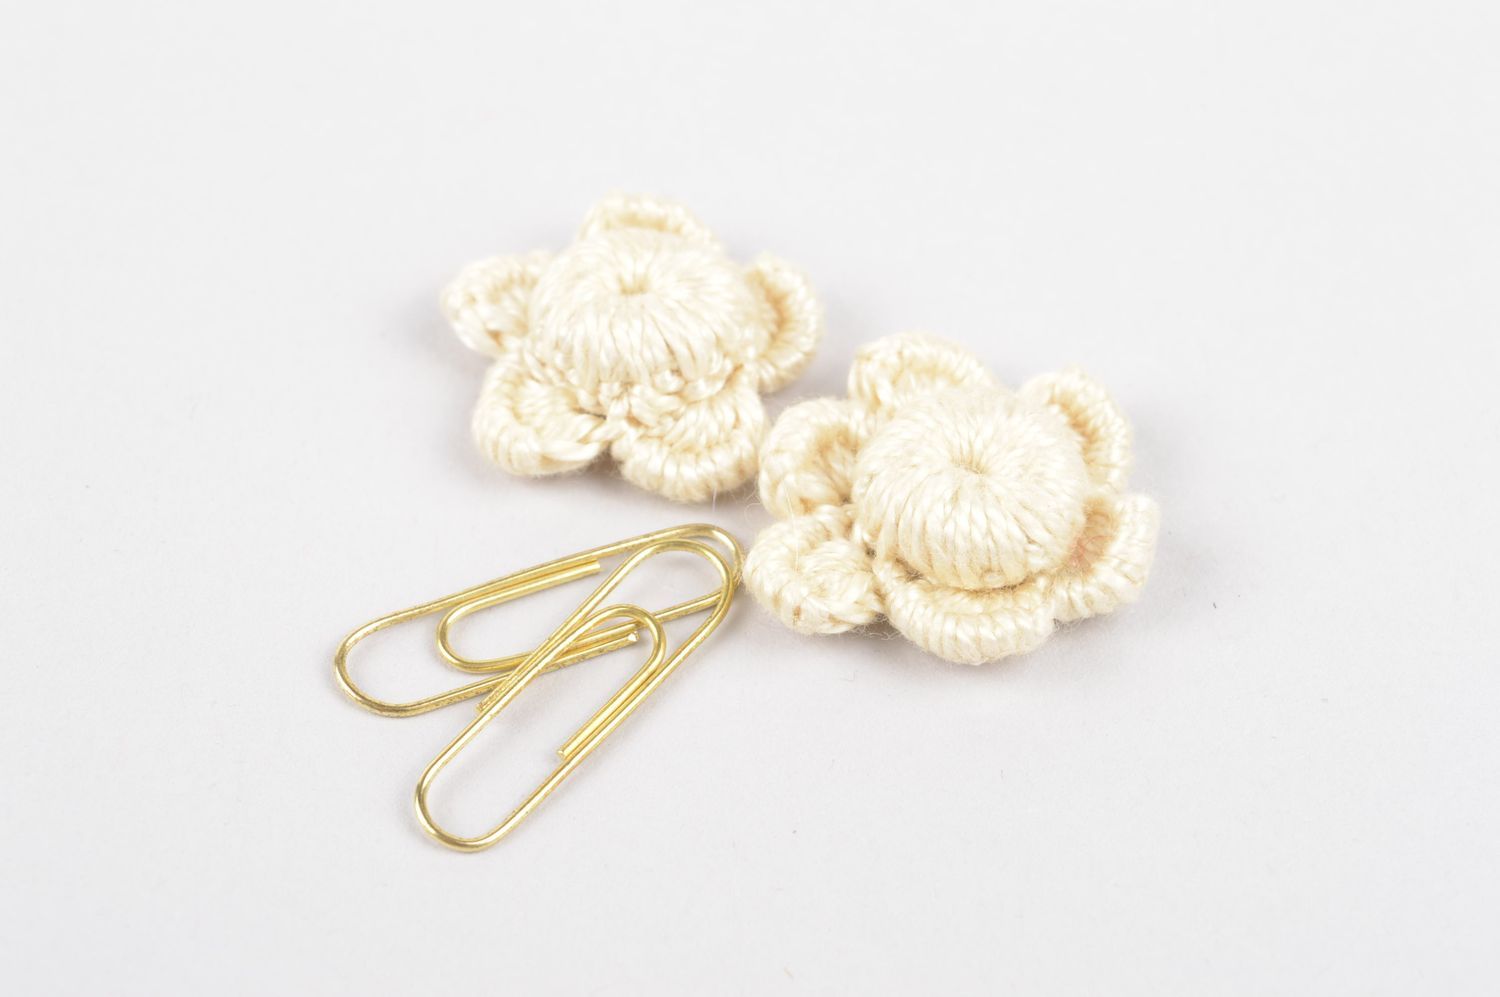 Stylish handmade crochet flower fashion trends DIY jewelry making supplies photo 5